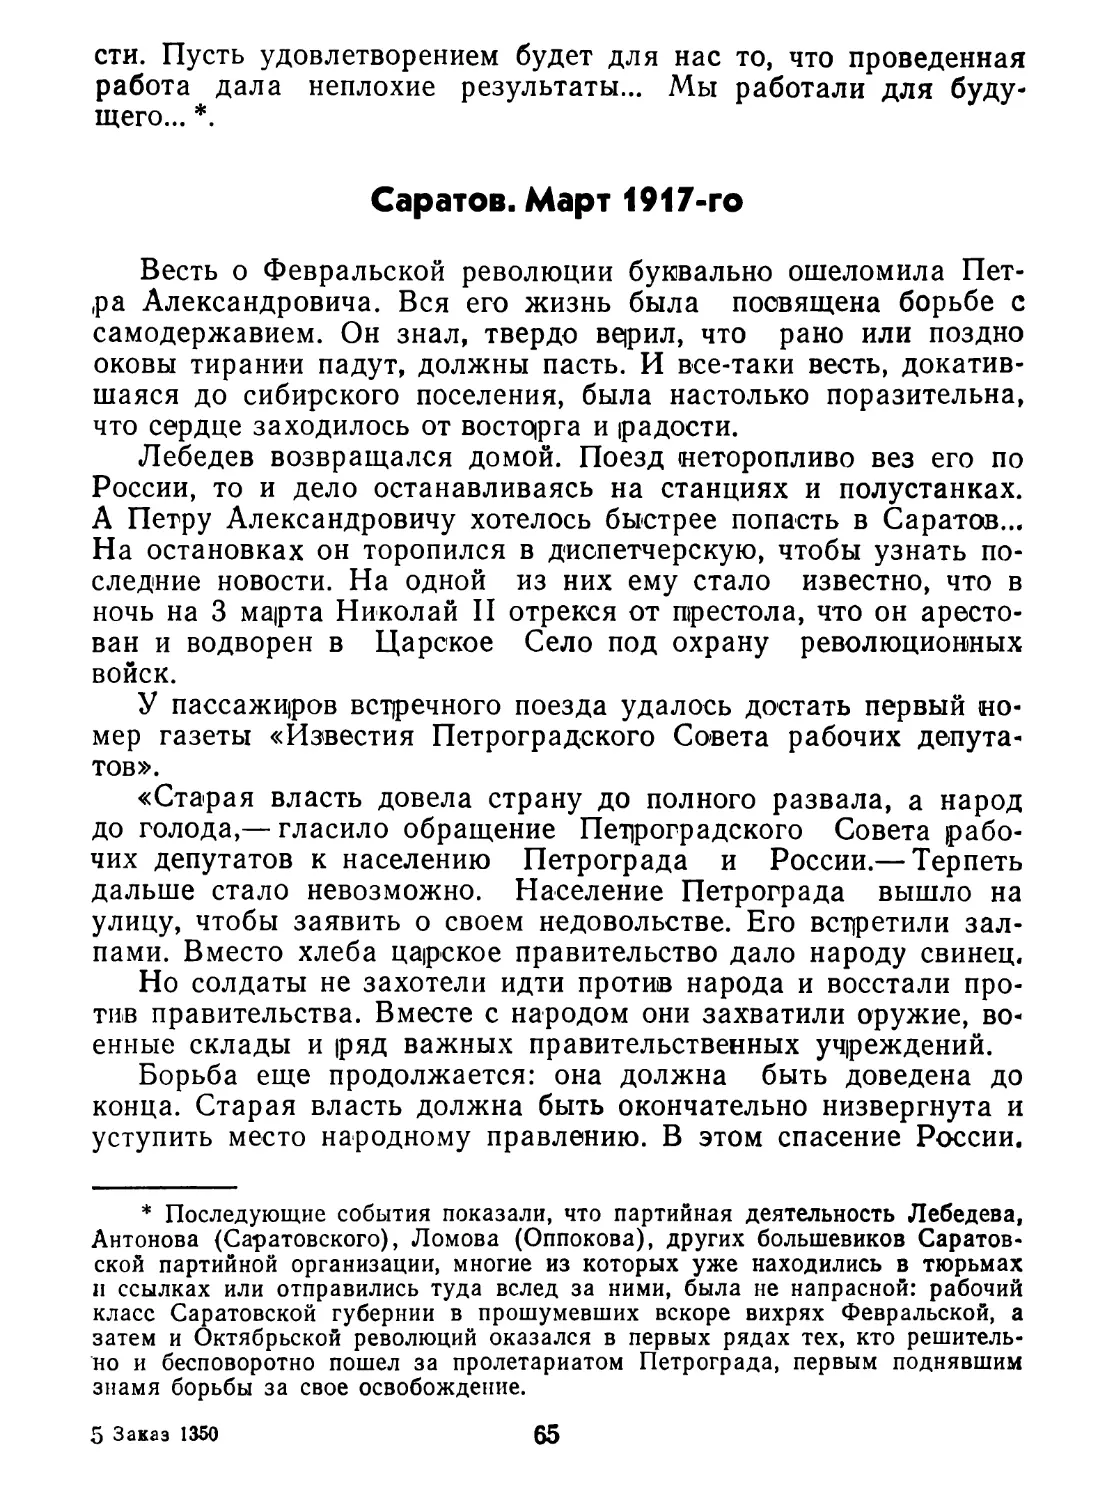 Саратов. Март 1917-го